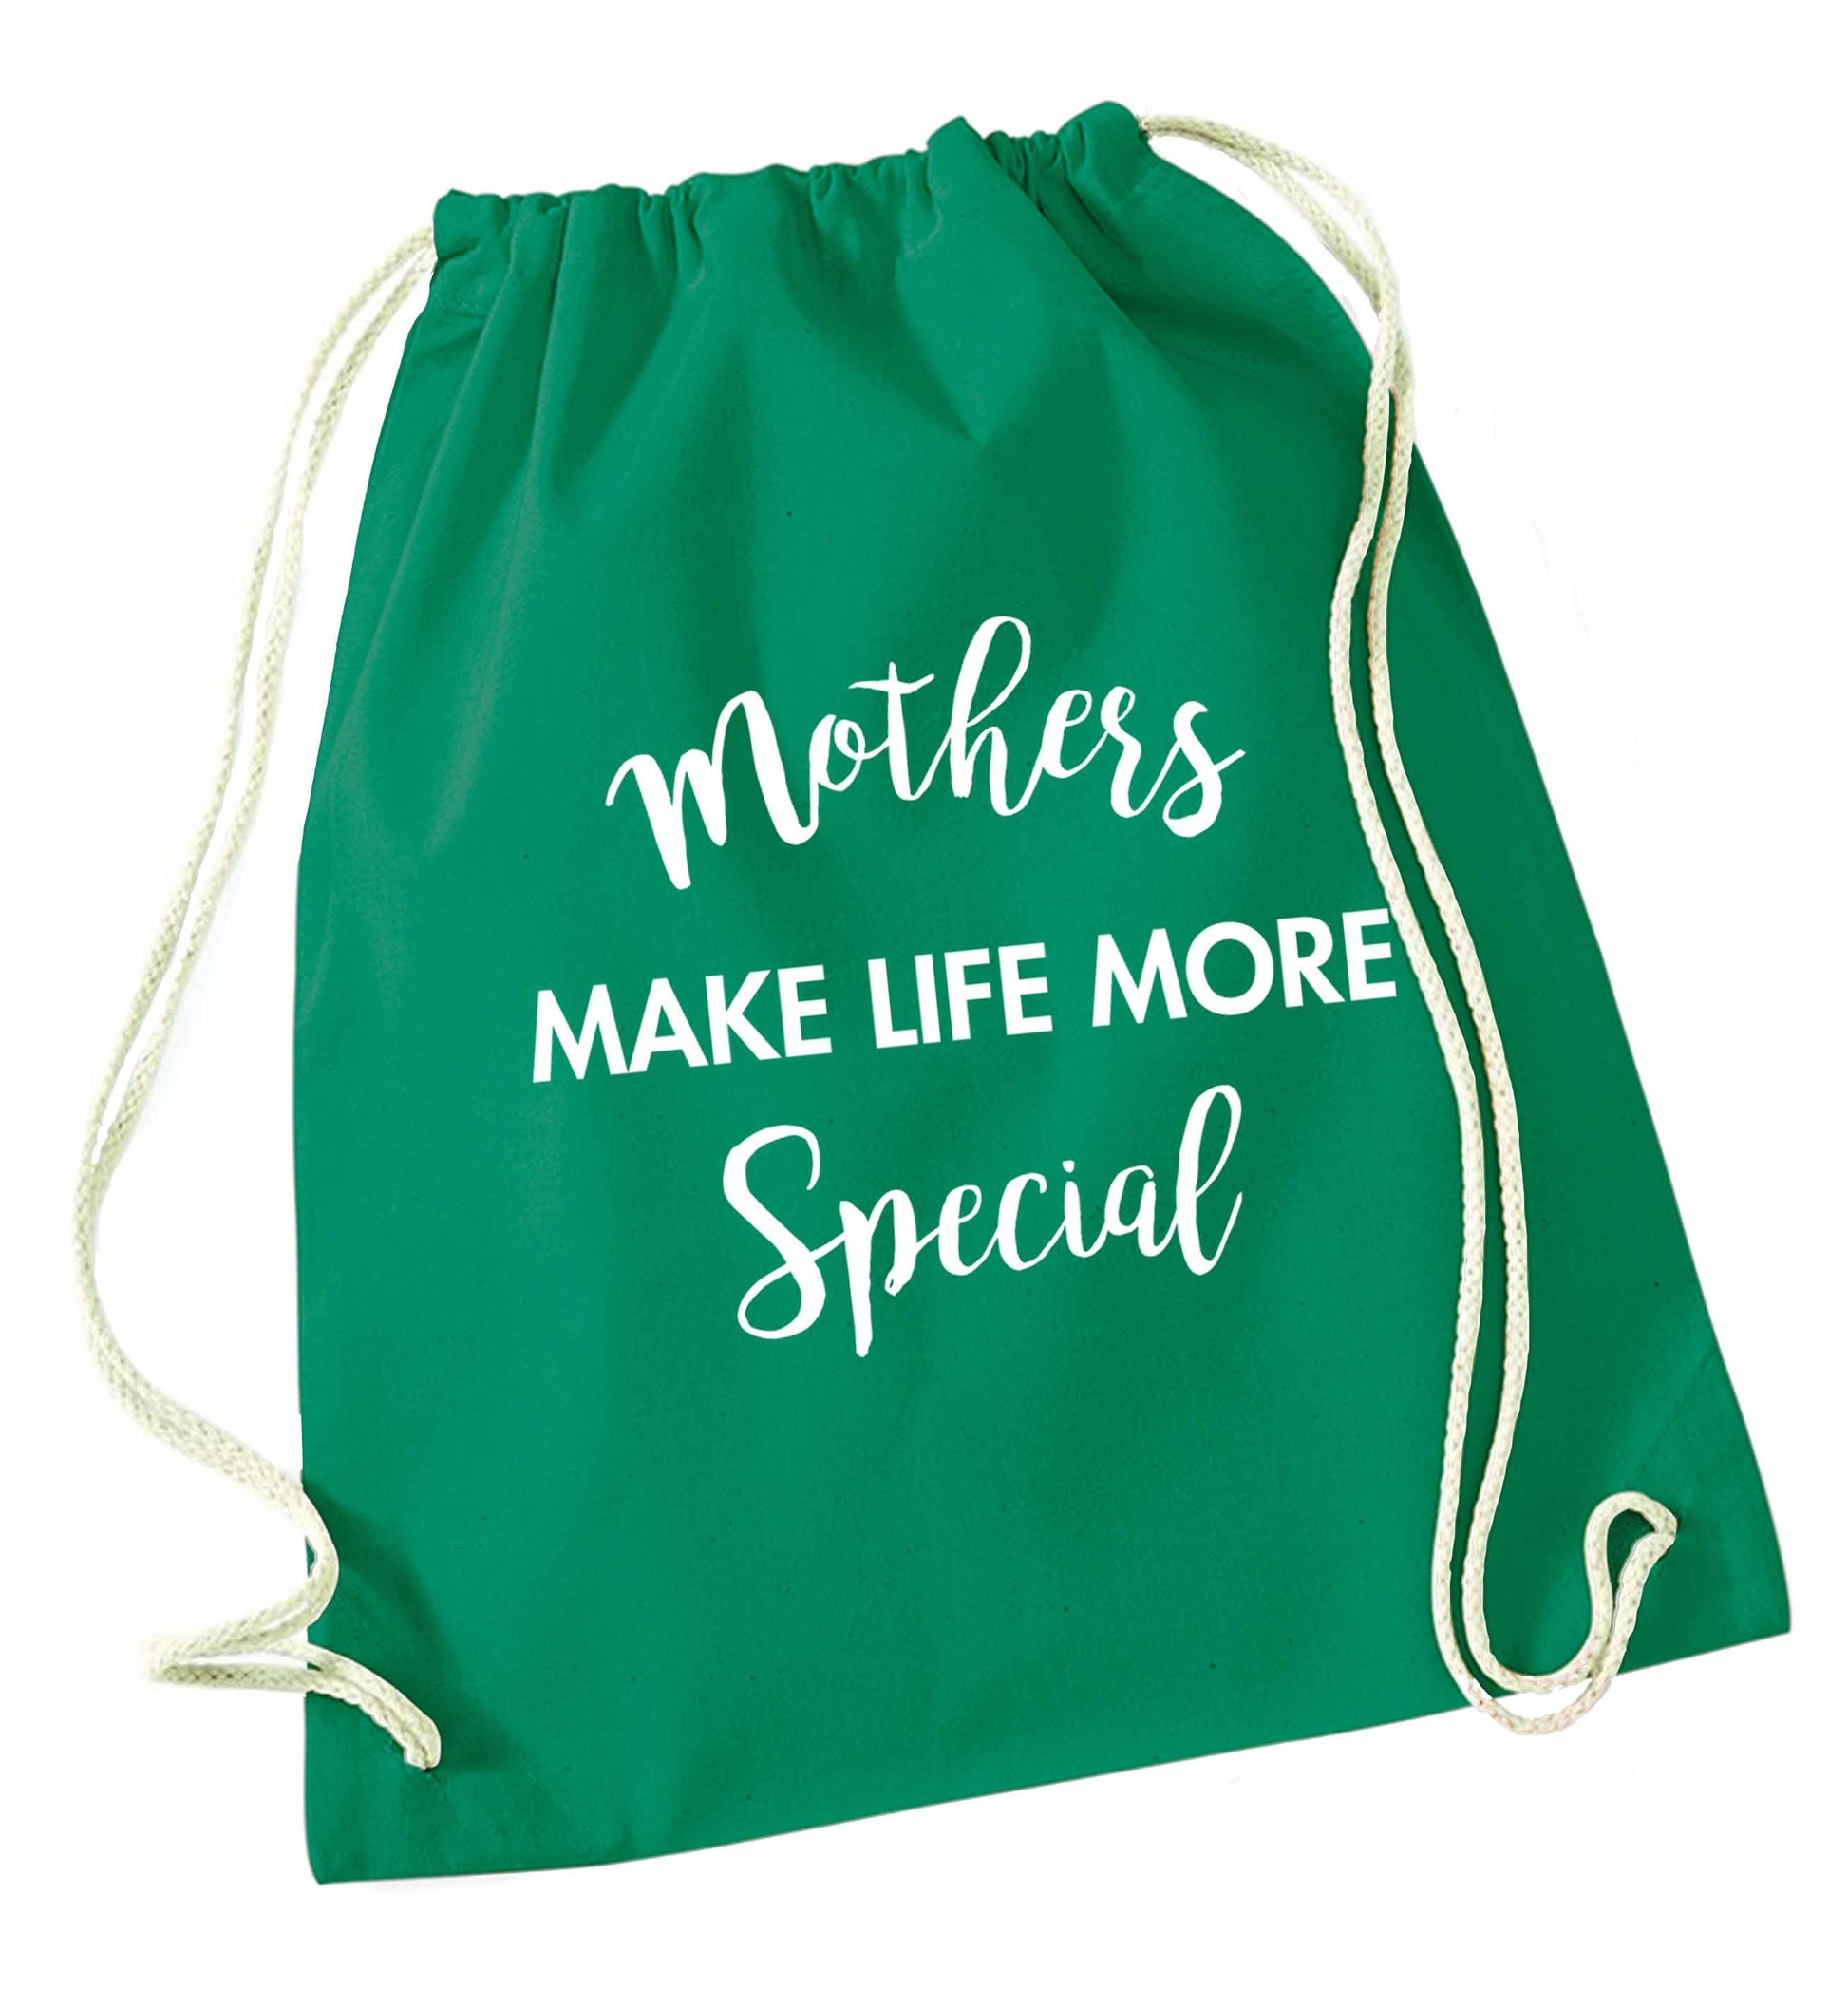 Mother's make life more special green drawstring bag